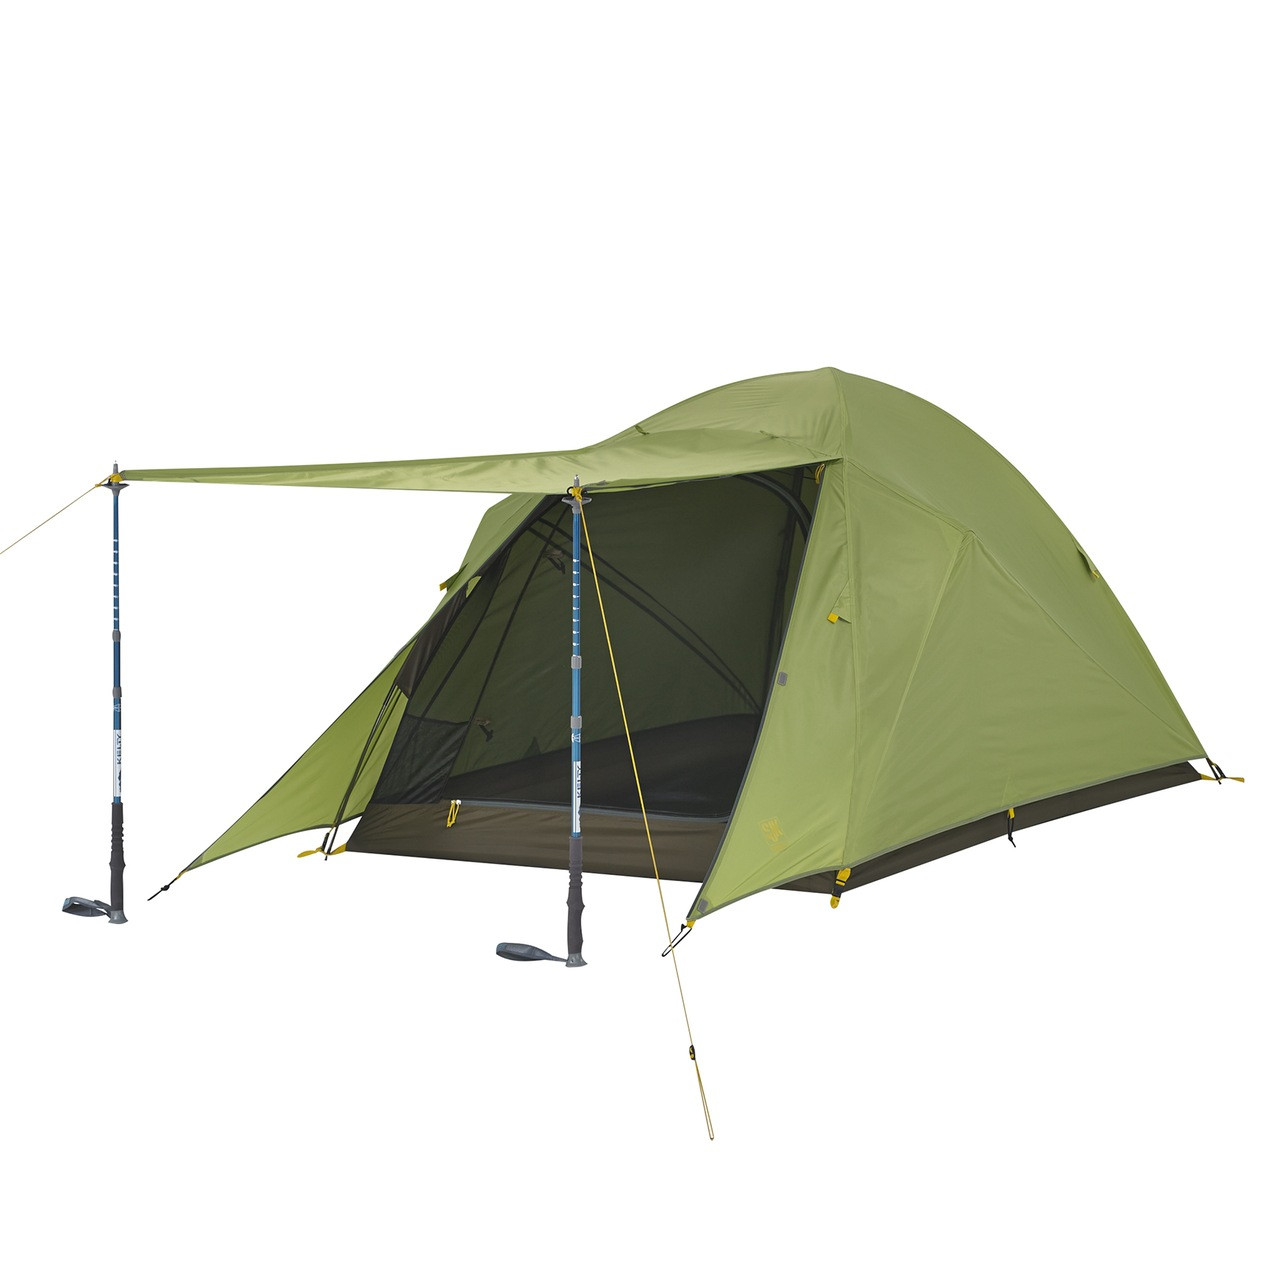 SJK Daybreak 2 Person Tent  Lightweight Backcountry Shelter